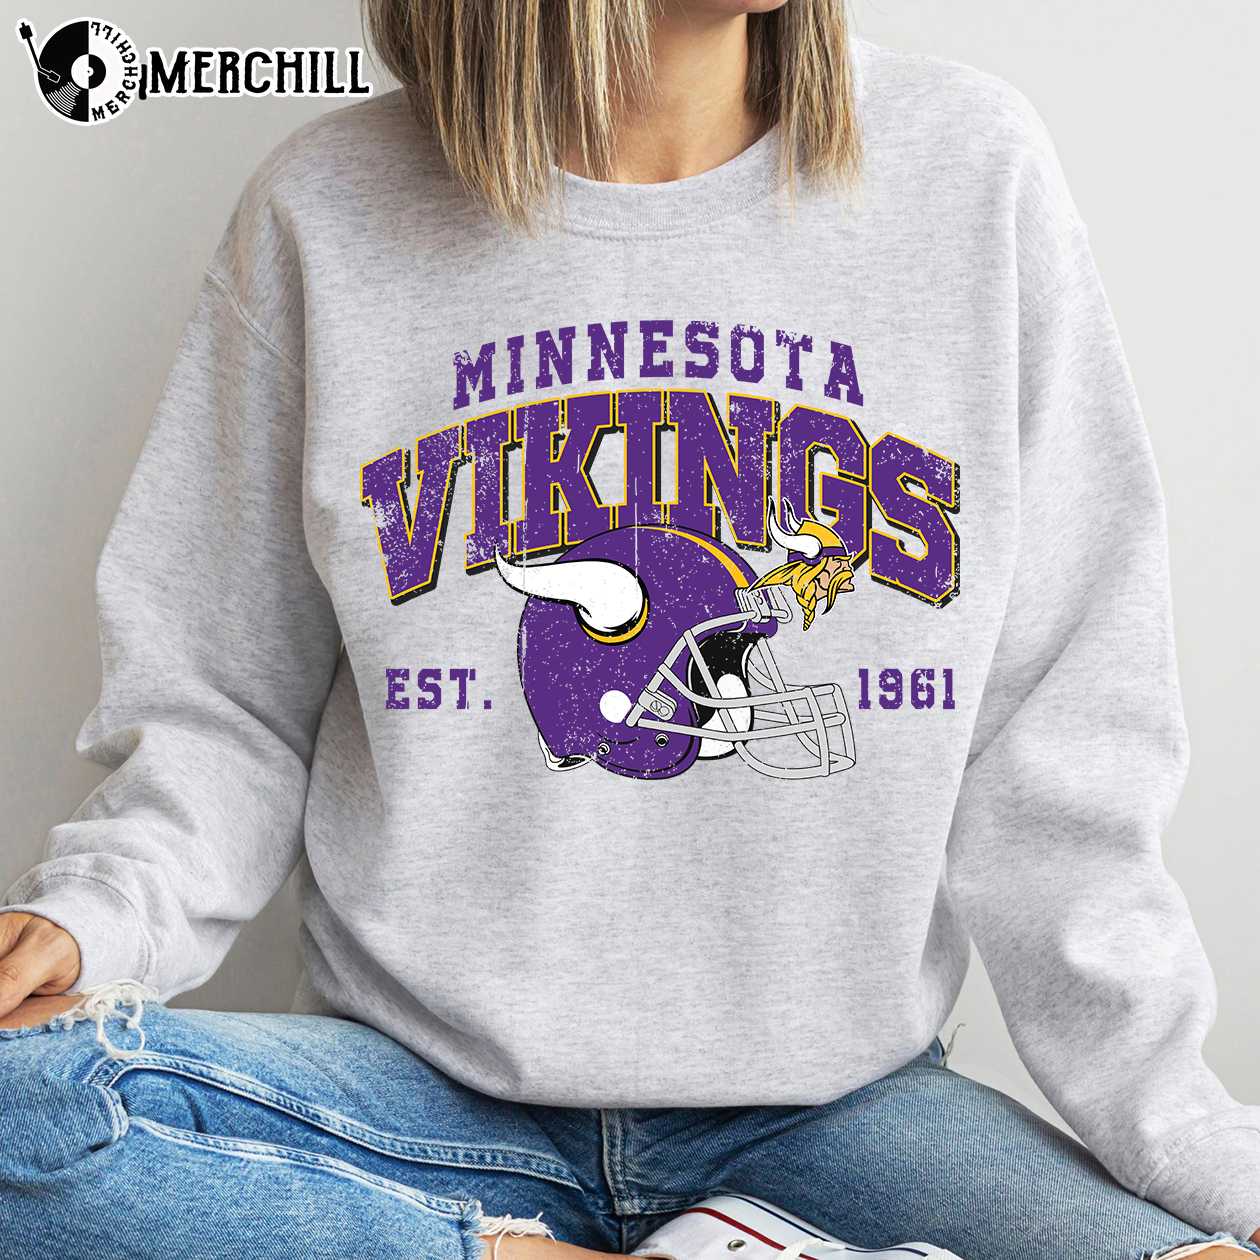 Minnesota Vikings playoff shirts, hat, hoodies and more